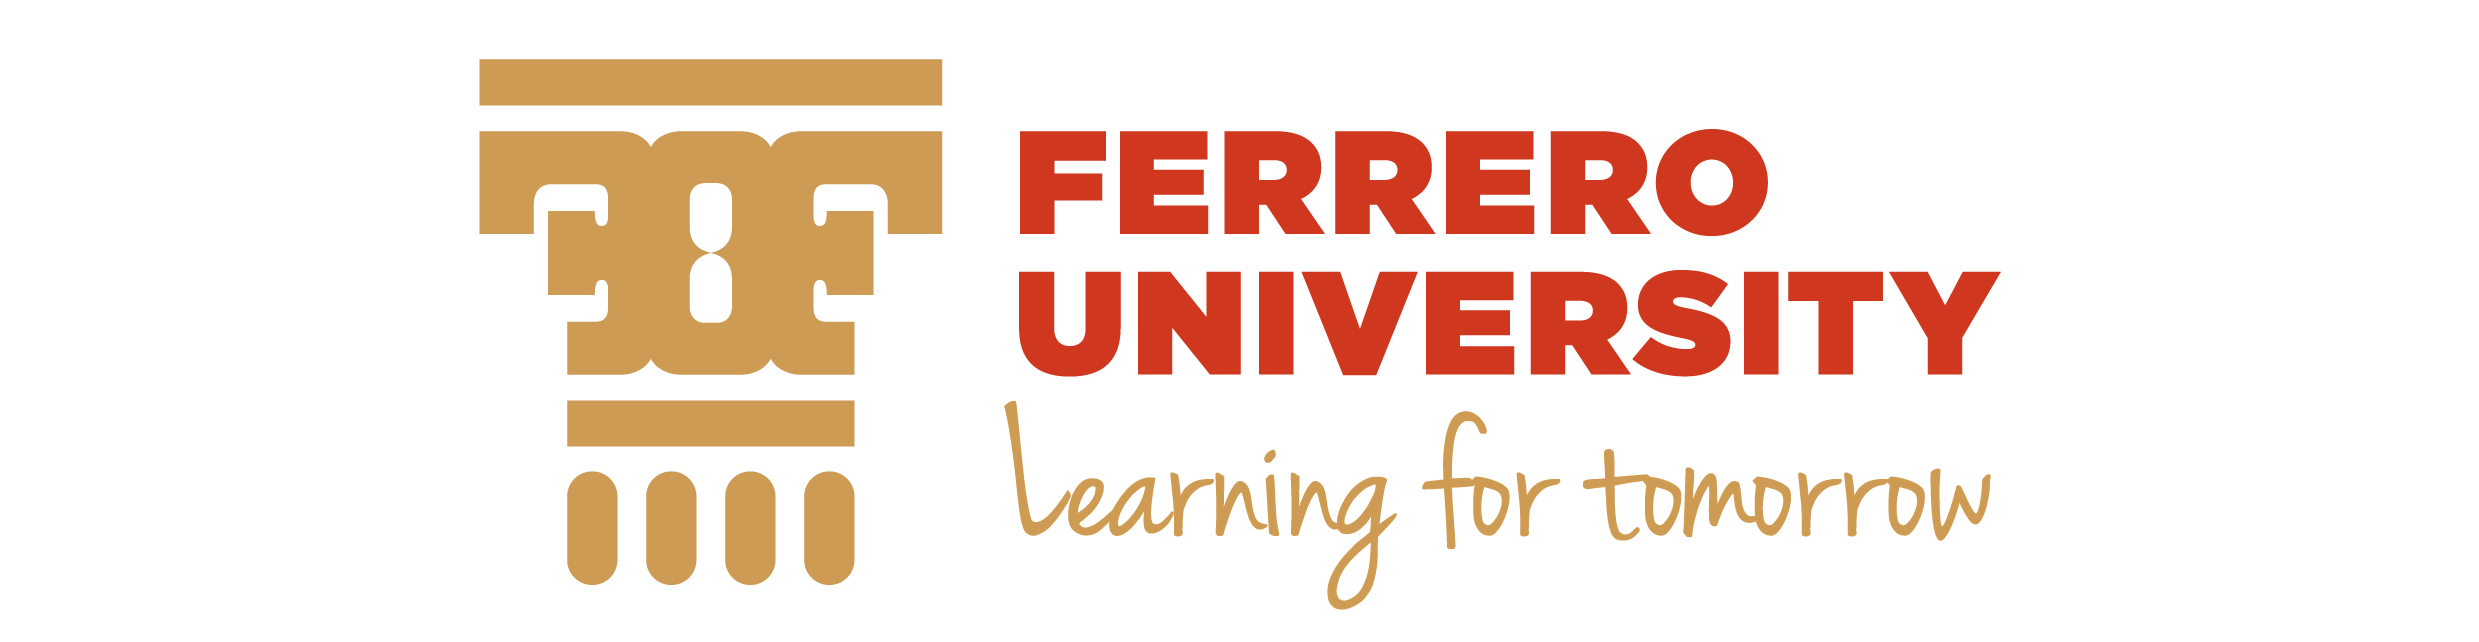 FerreroUniversity_Logo